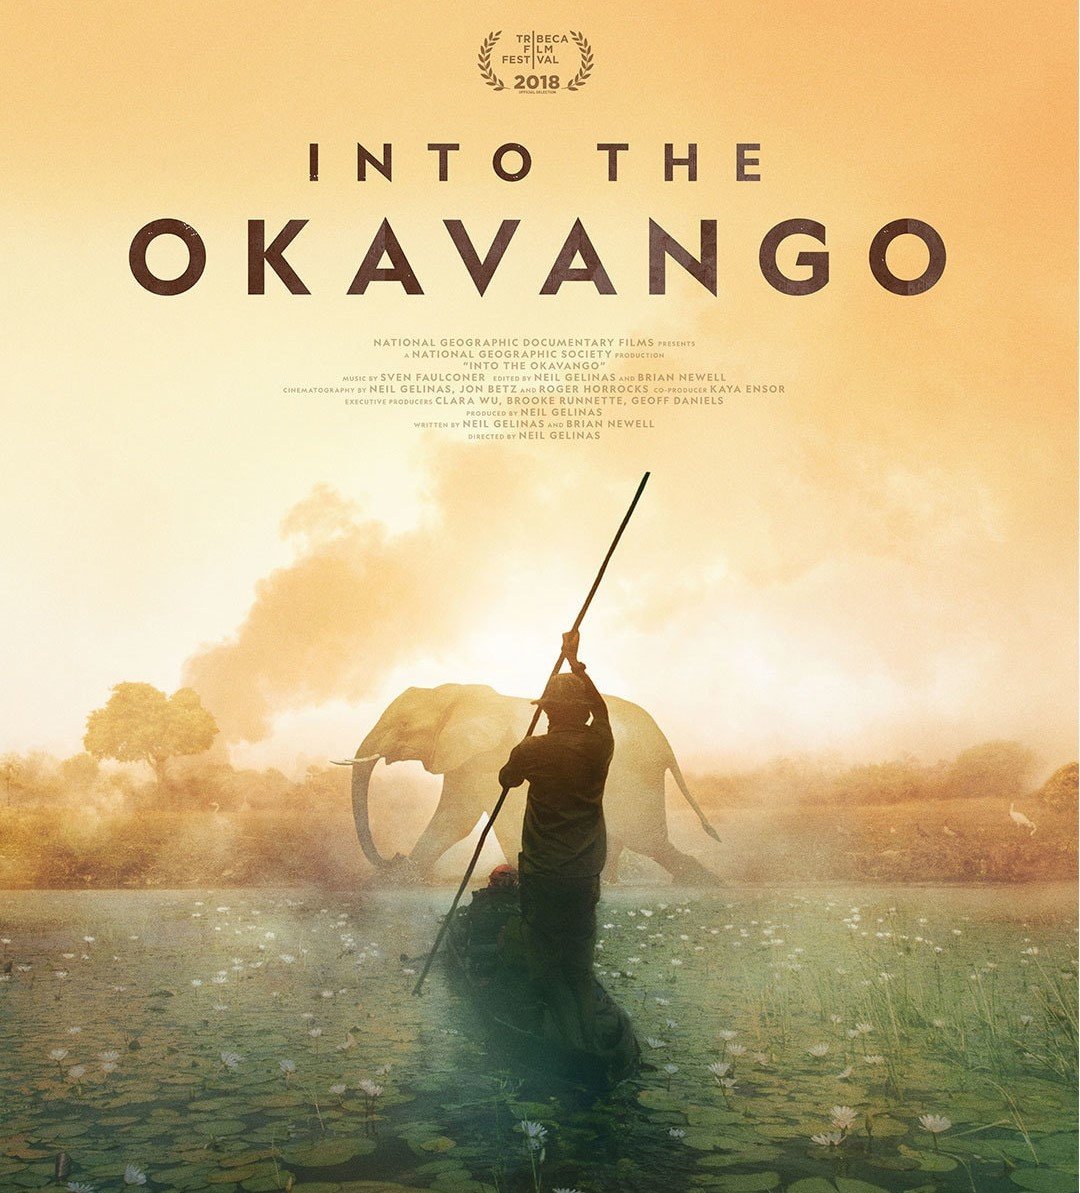 The Best Nature Documentaries on Botswana - Okavango Delta